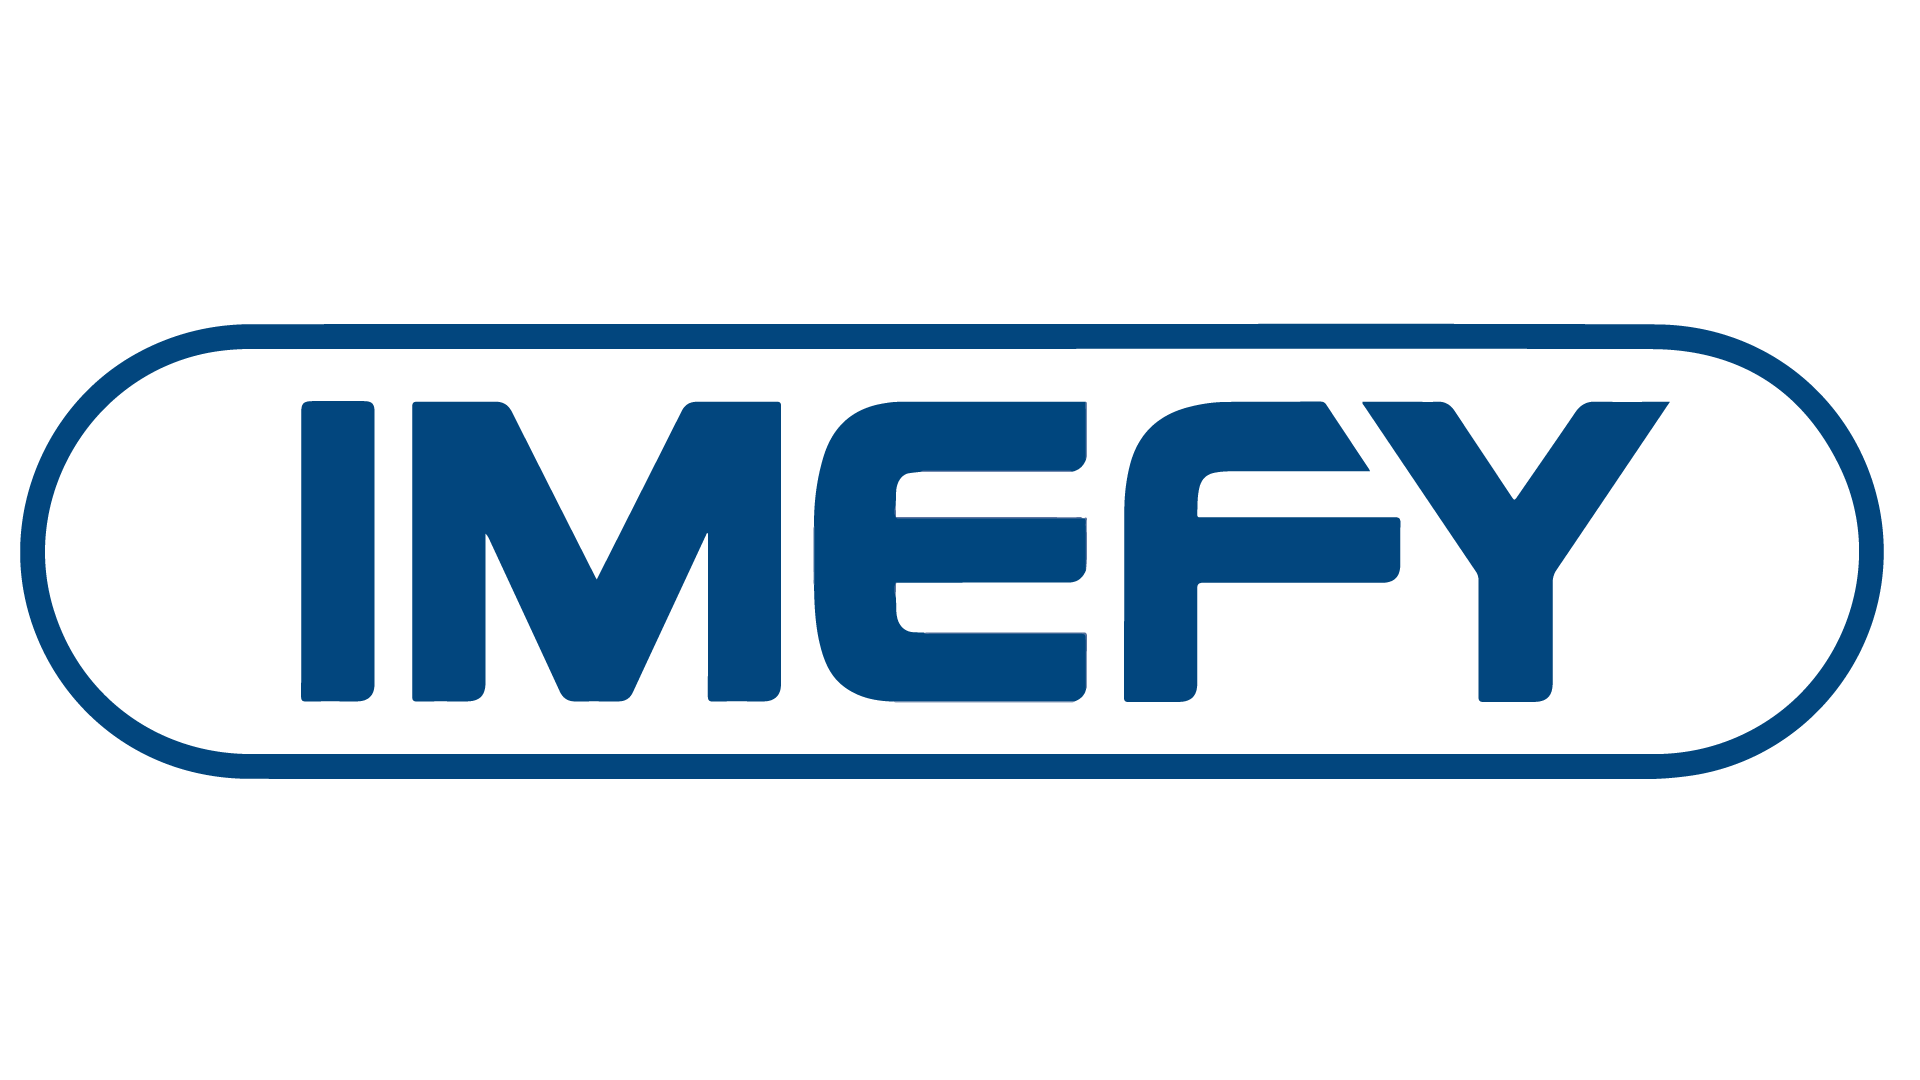 IMEFY - Industrias Mecano Eléctricas Fontecha Yébenes, S.L